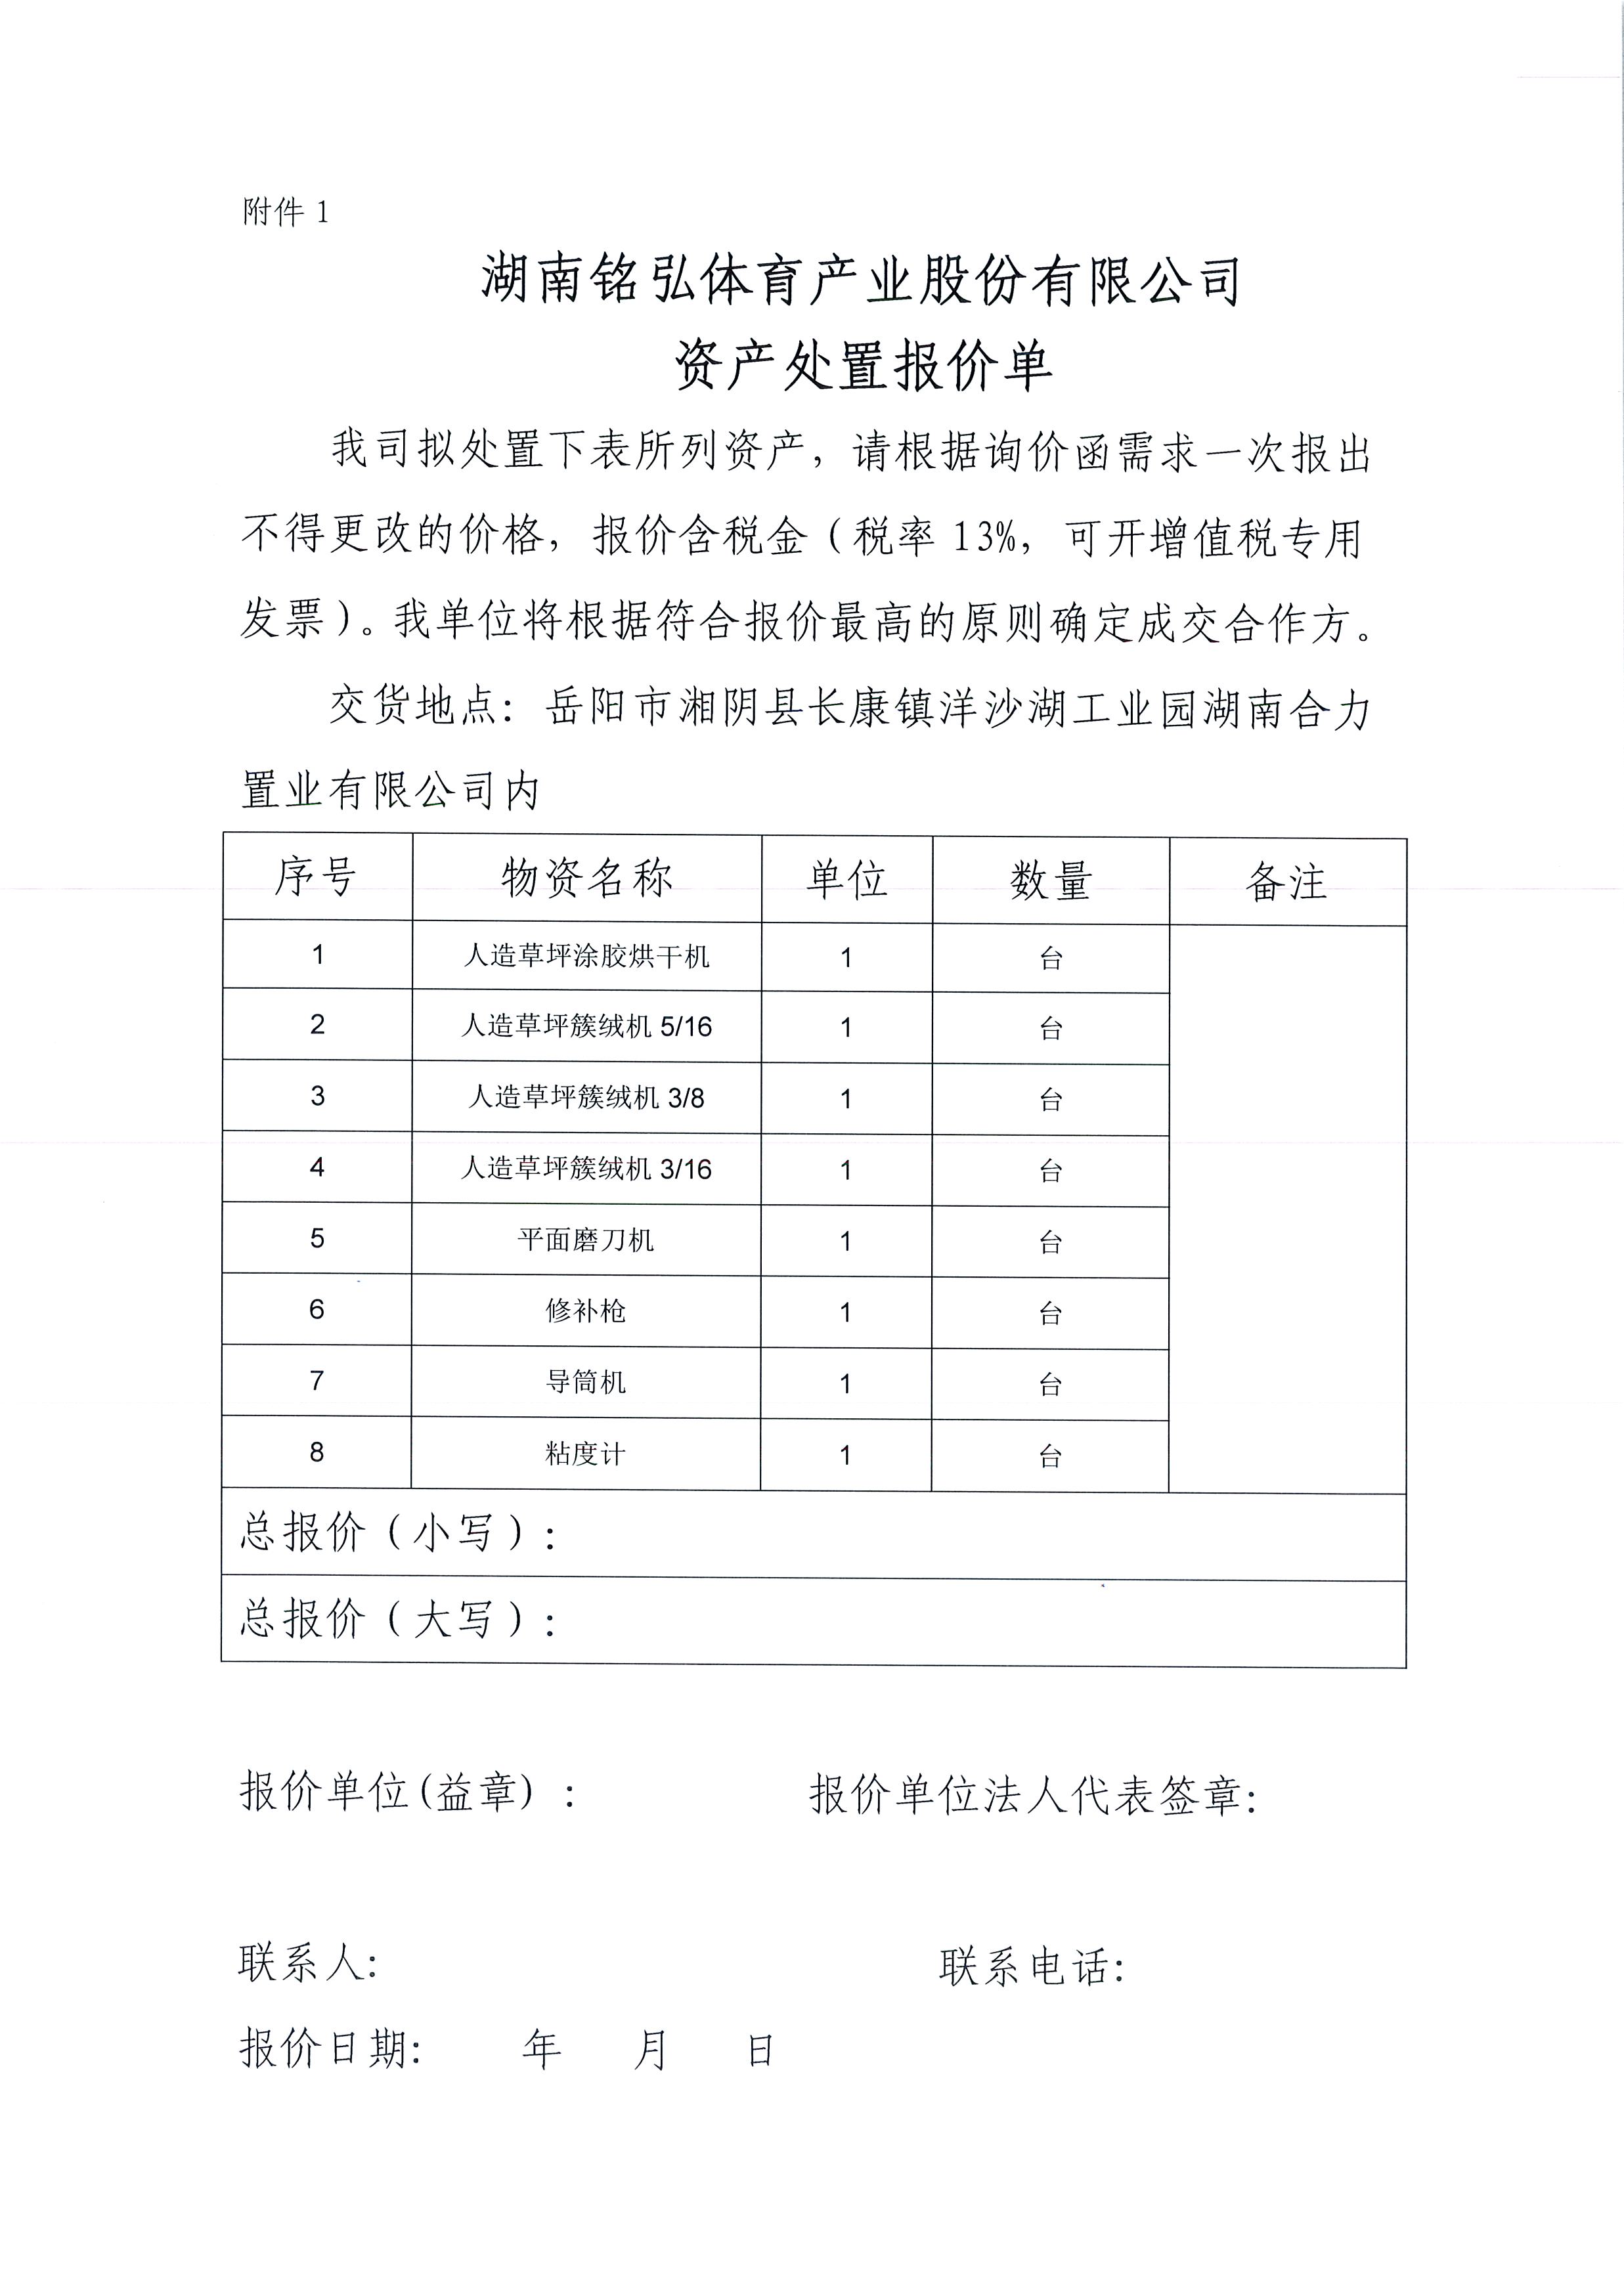 aoa体育(中国)股份有限公司关于处置一批人造草生产设备的询价函4